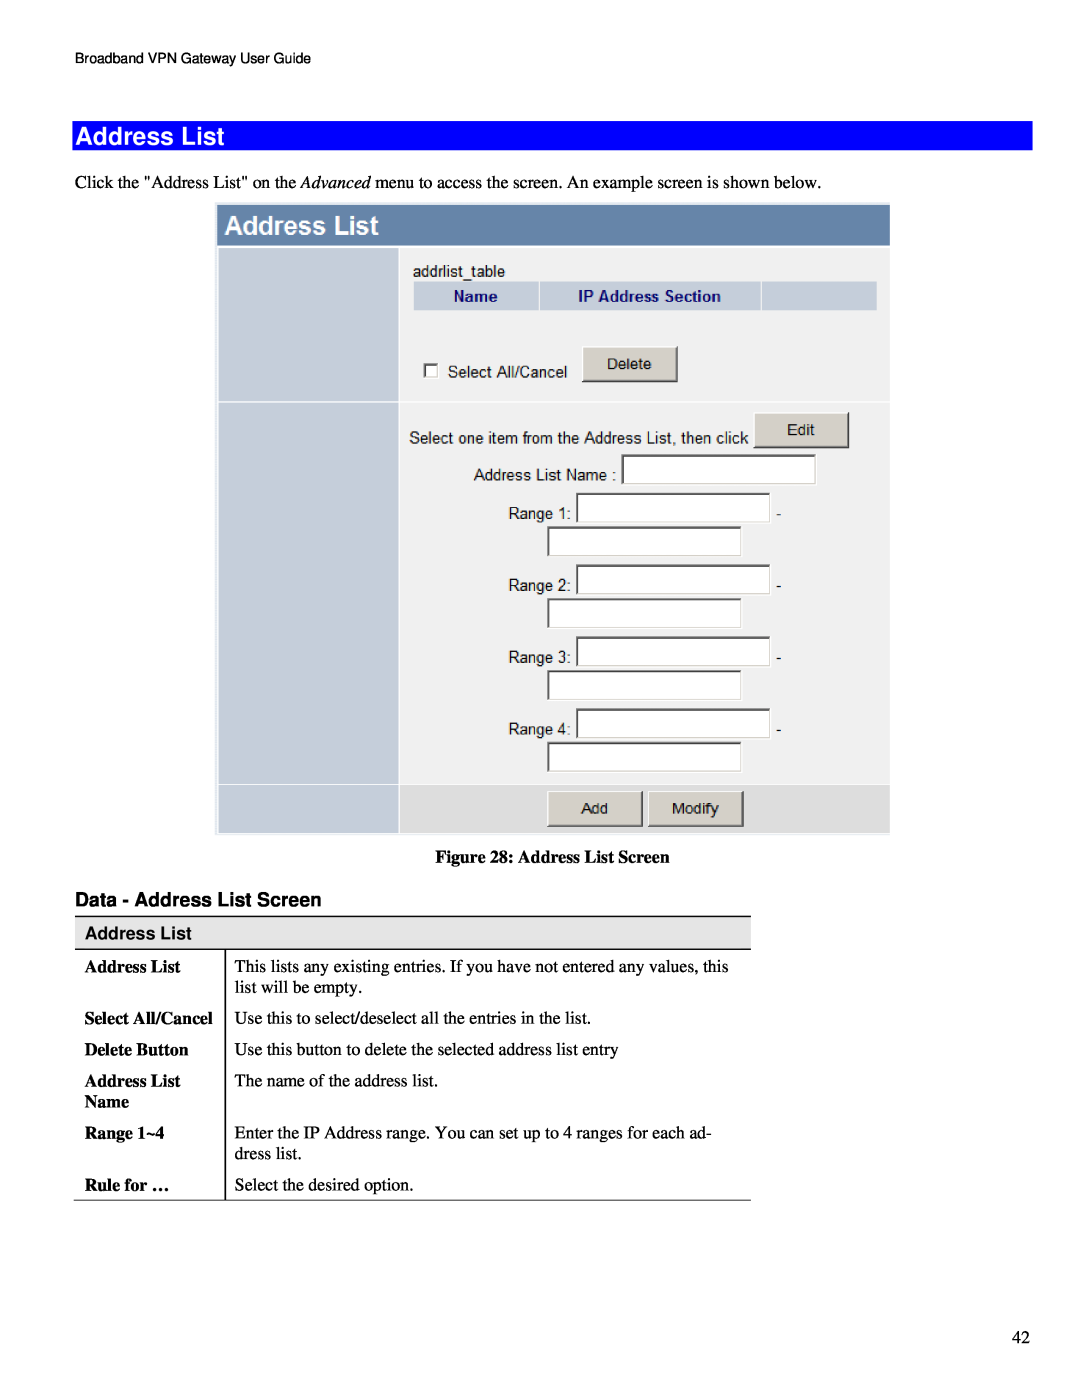 TRENDnet TW100-BRV324 manual Data - Address List Screen 